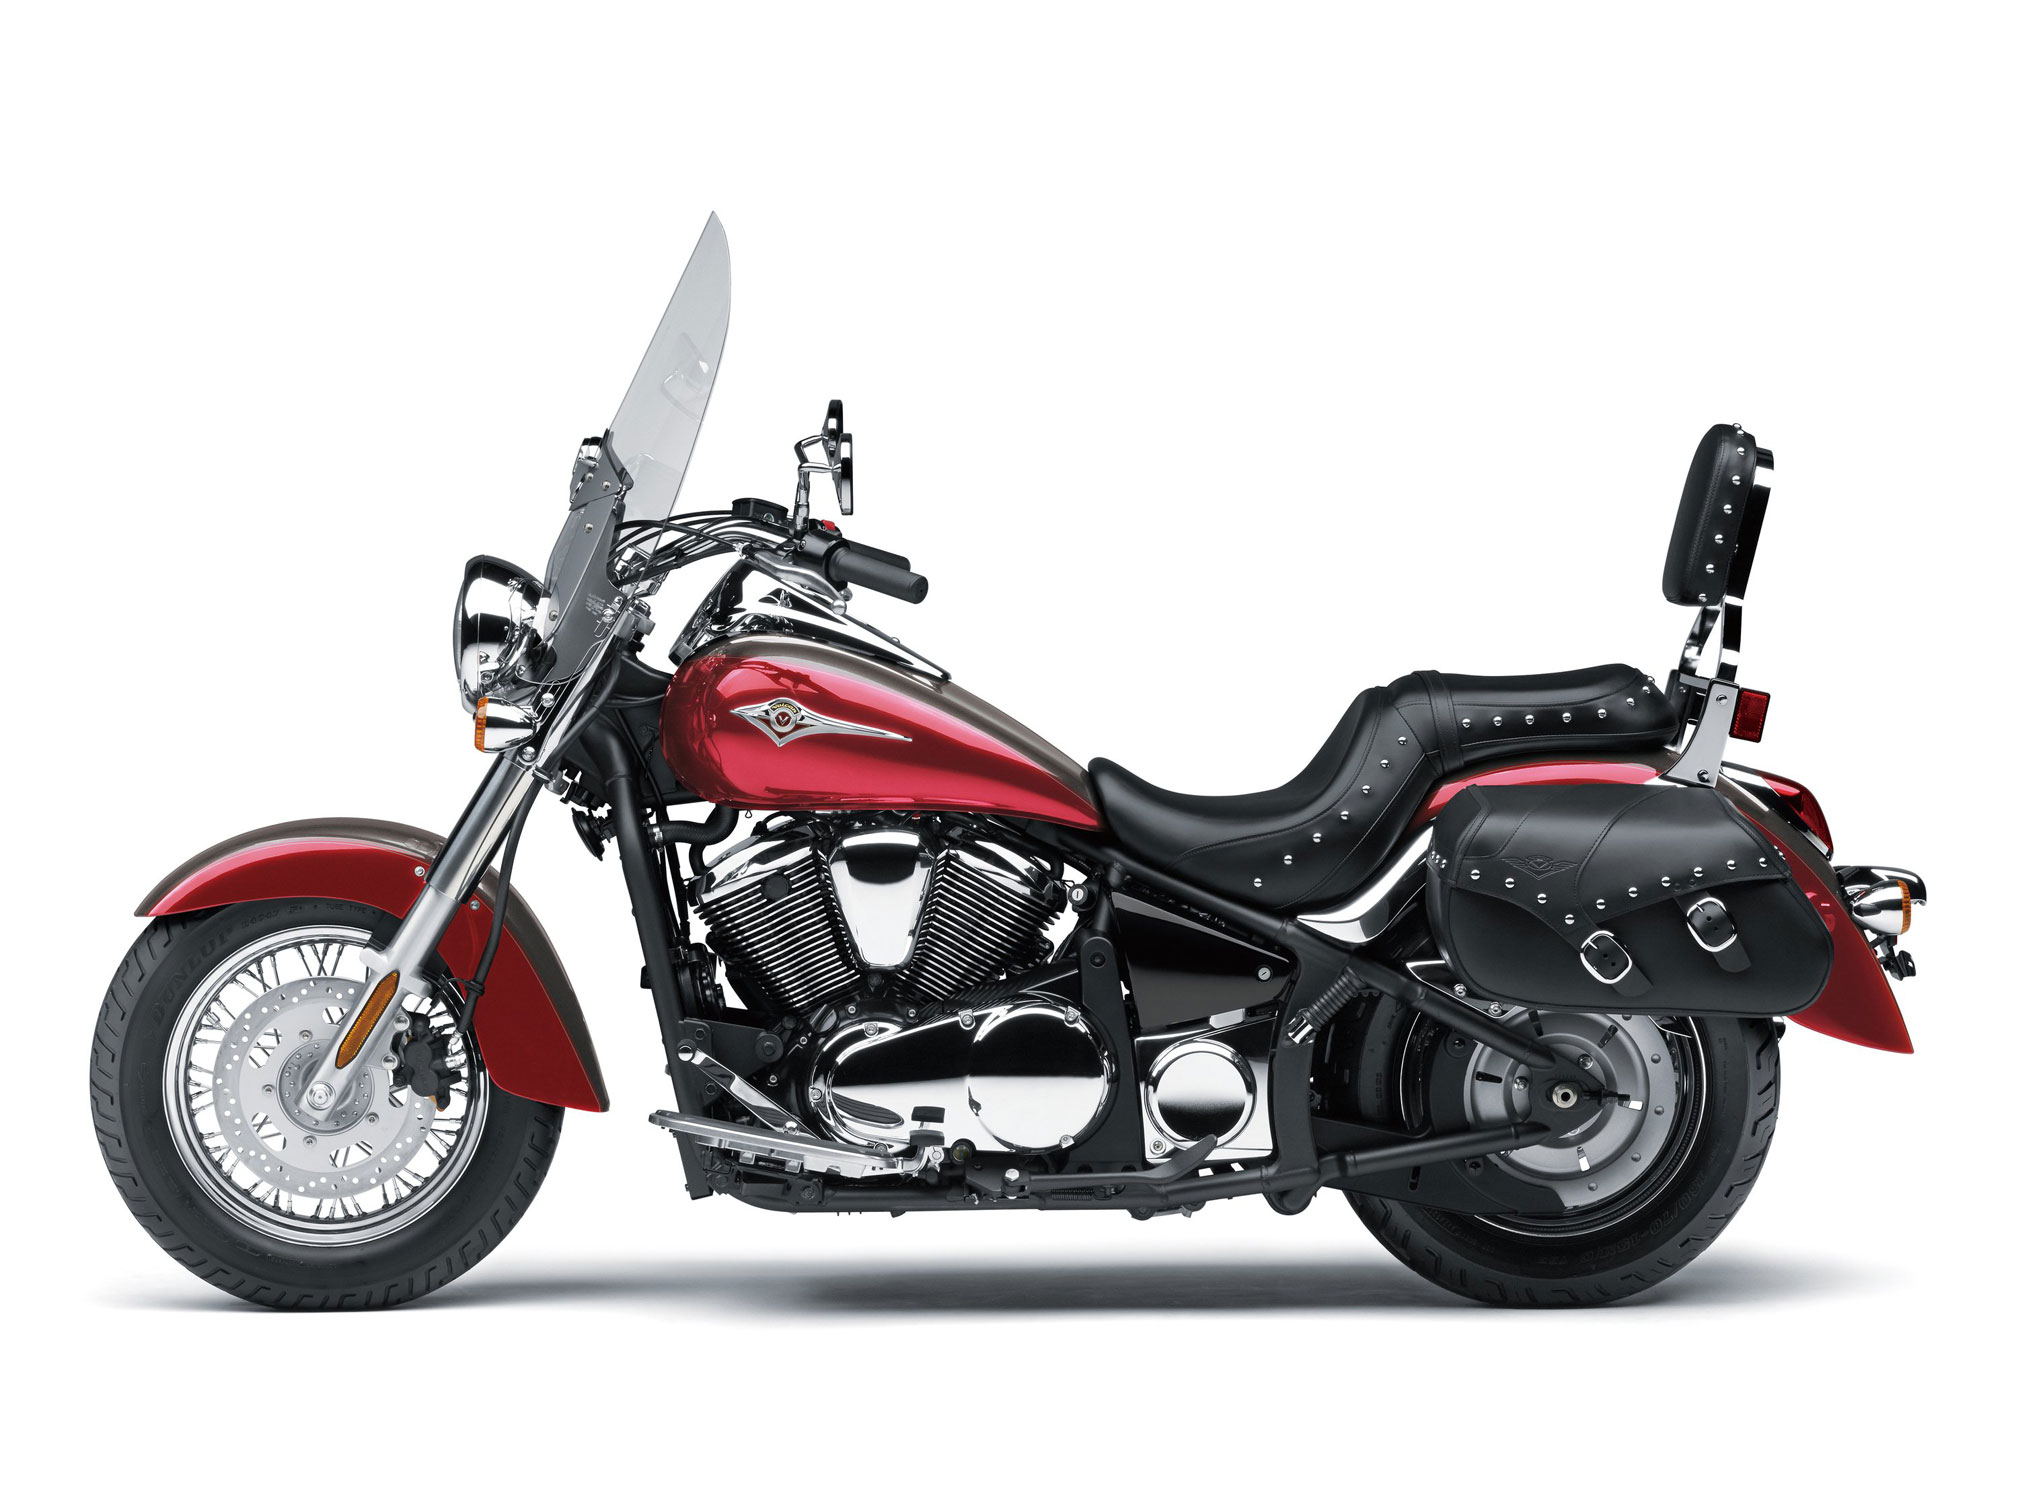 temperament Diplomatiske spørgsmål hundrede 2018 Kawasaki Vulcan 900 Classic LT Review • Total Motorcycle